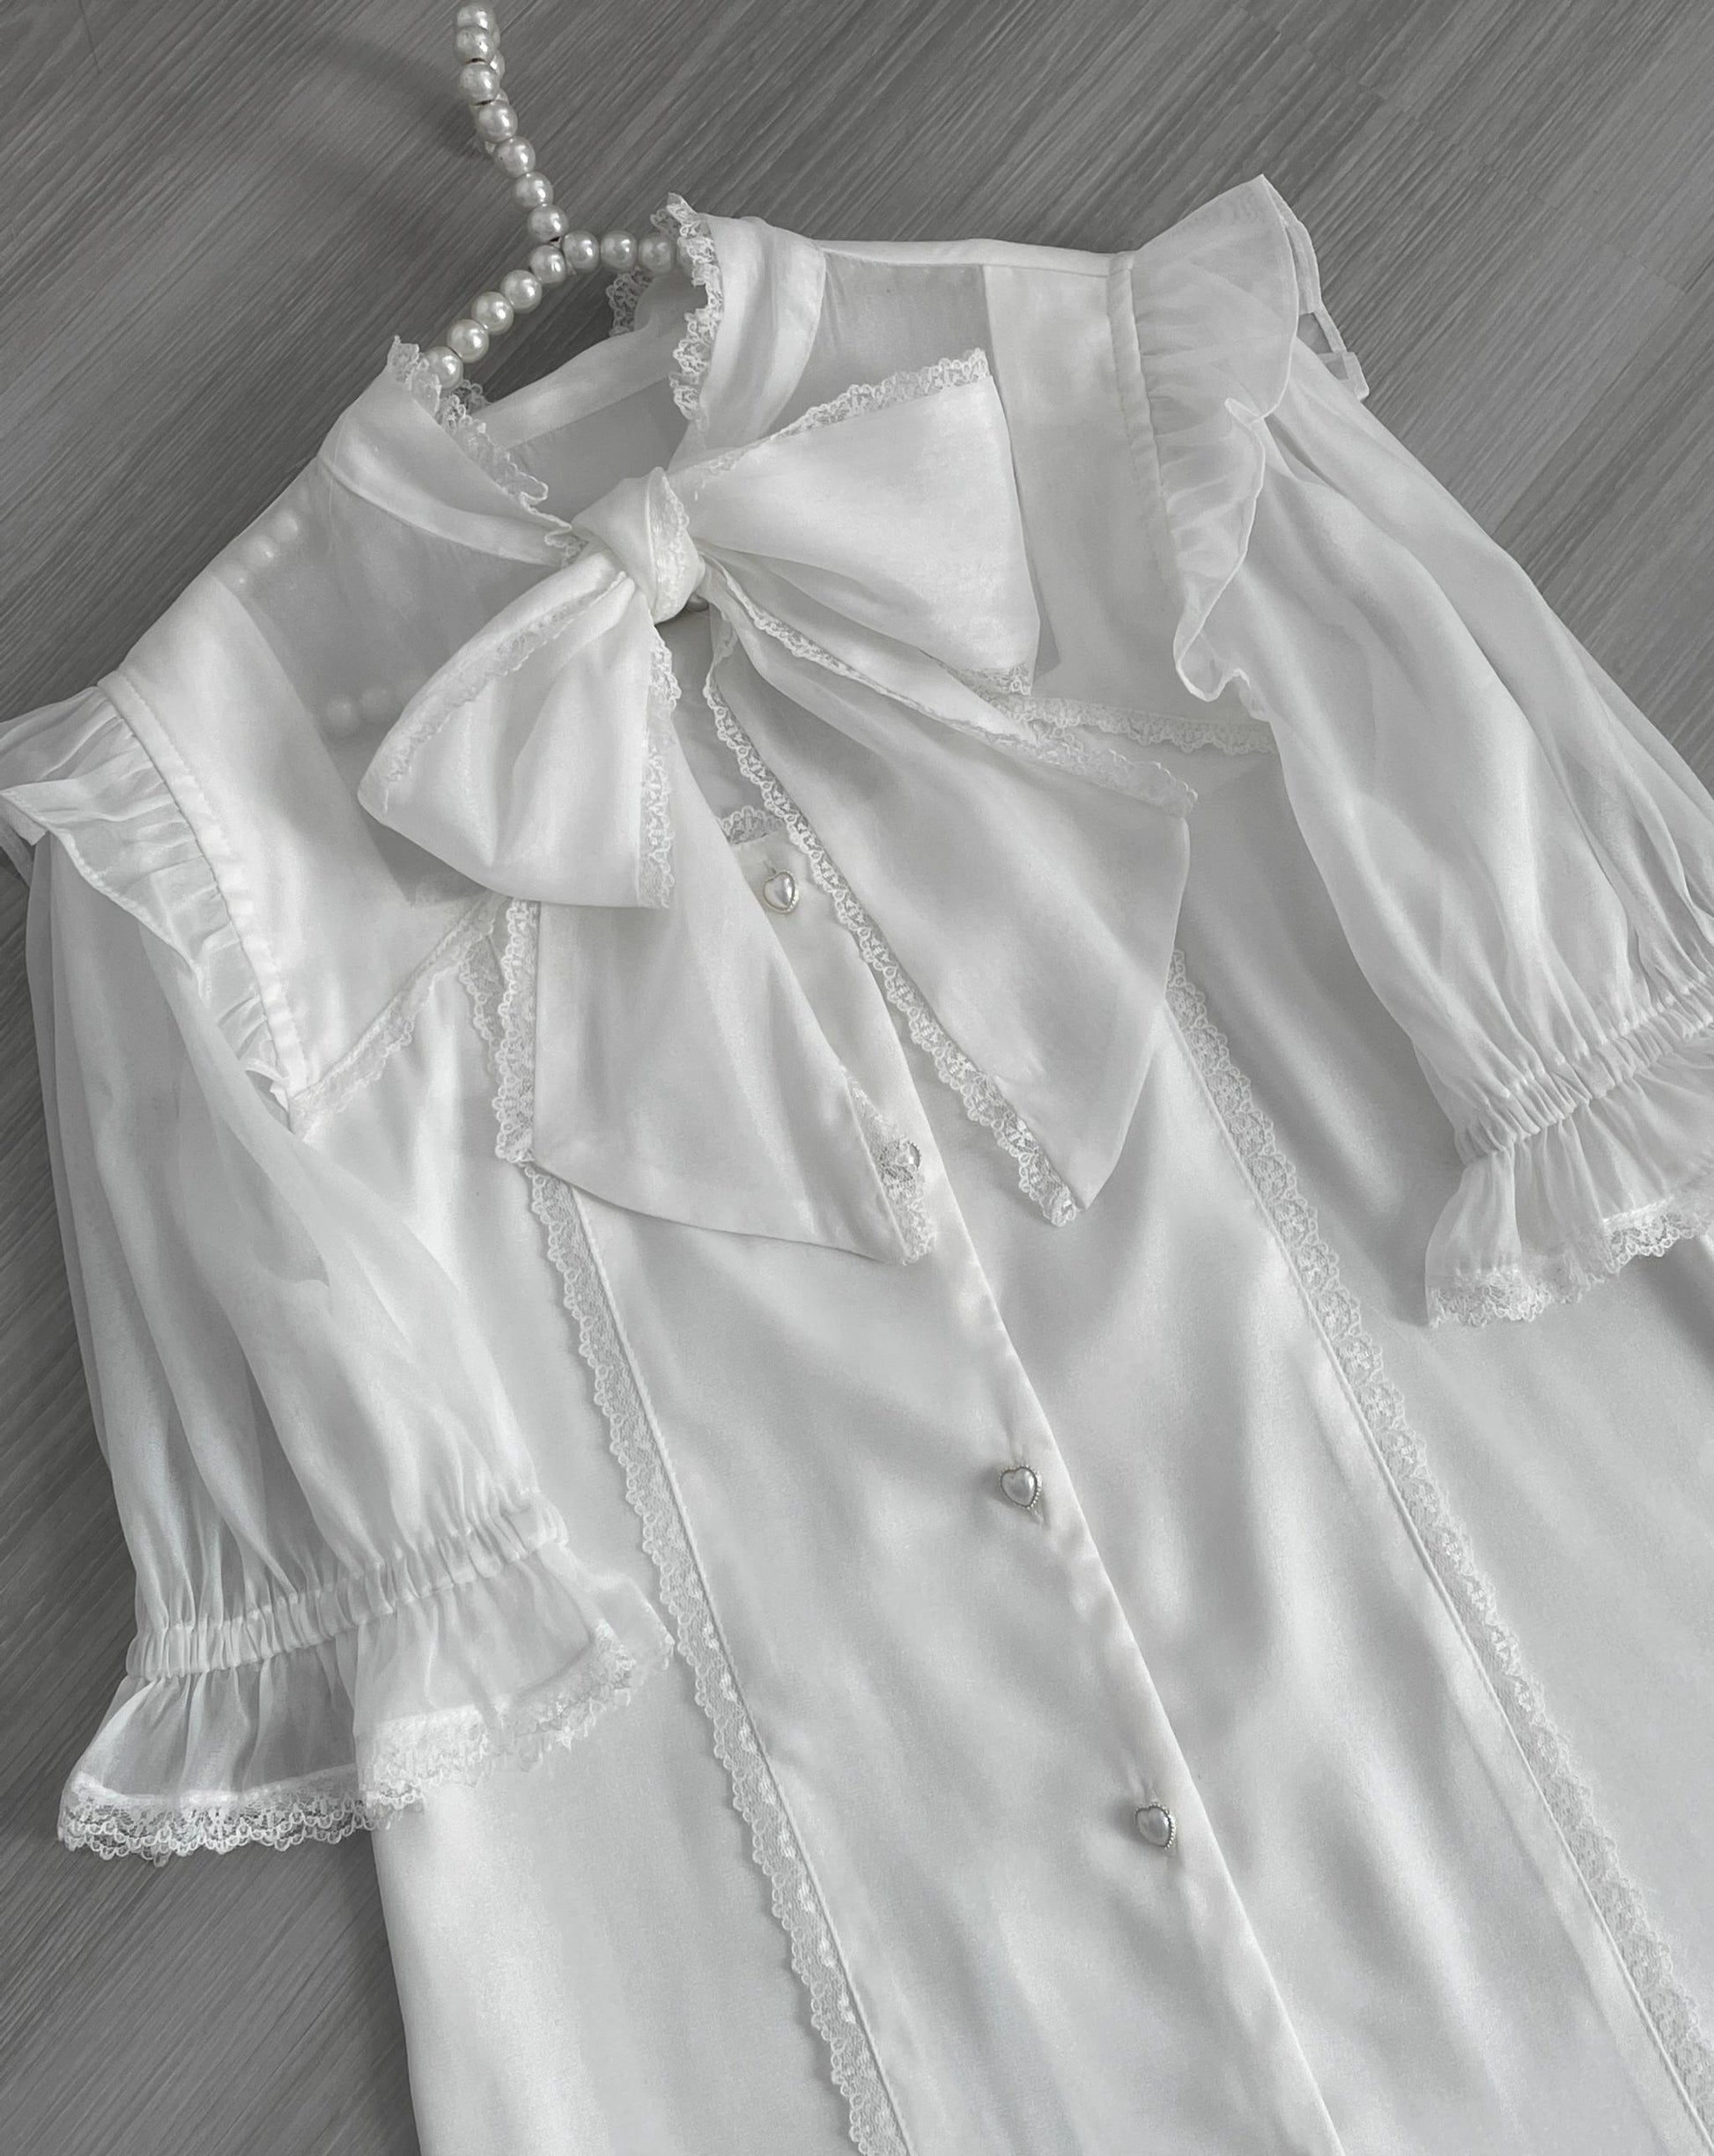 Jirai Kei Blouse Black White Pink Shirt Bowknot Short Sleeve Shirt 31994:432952